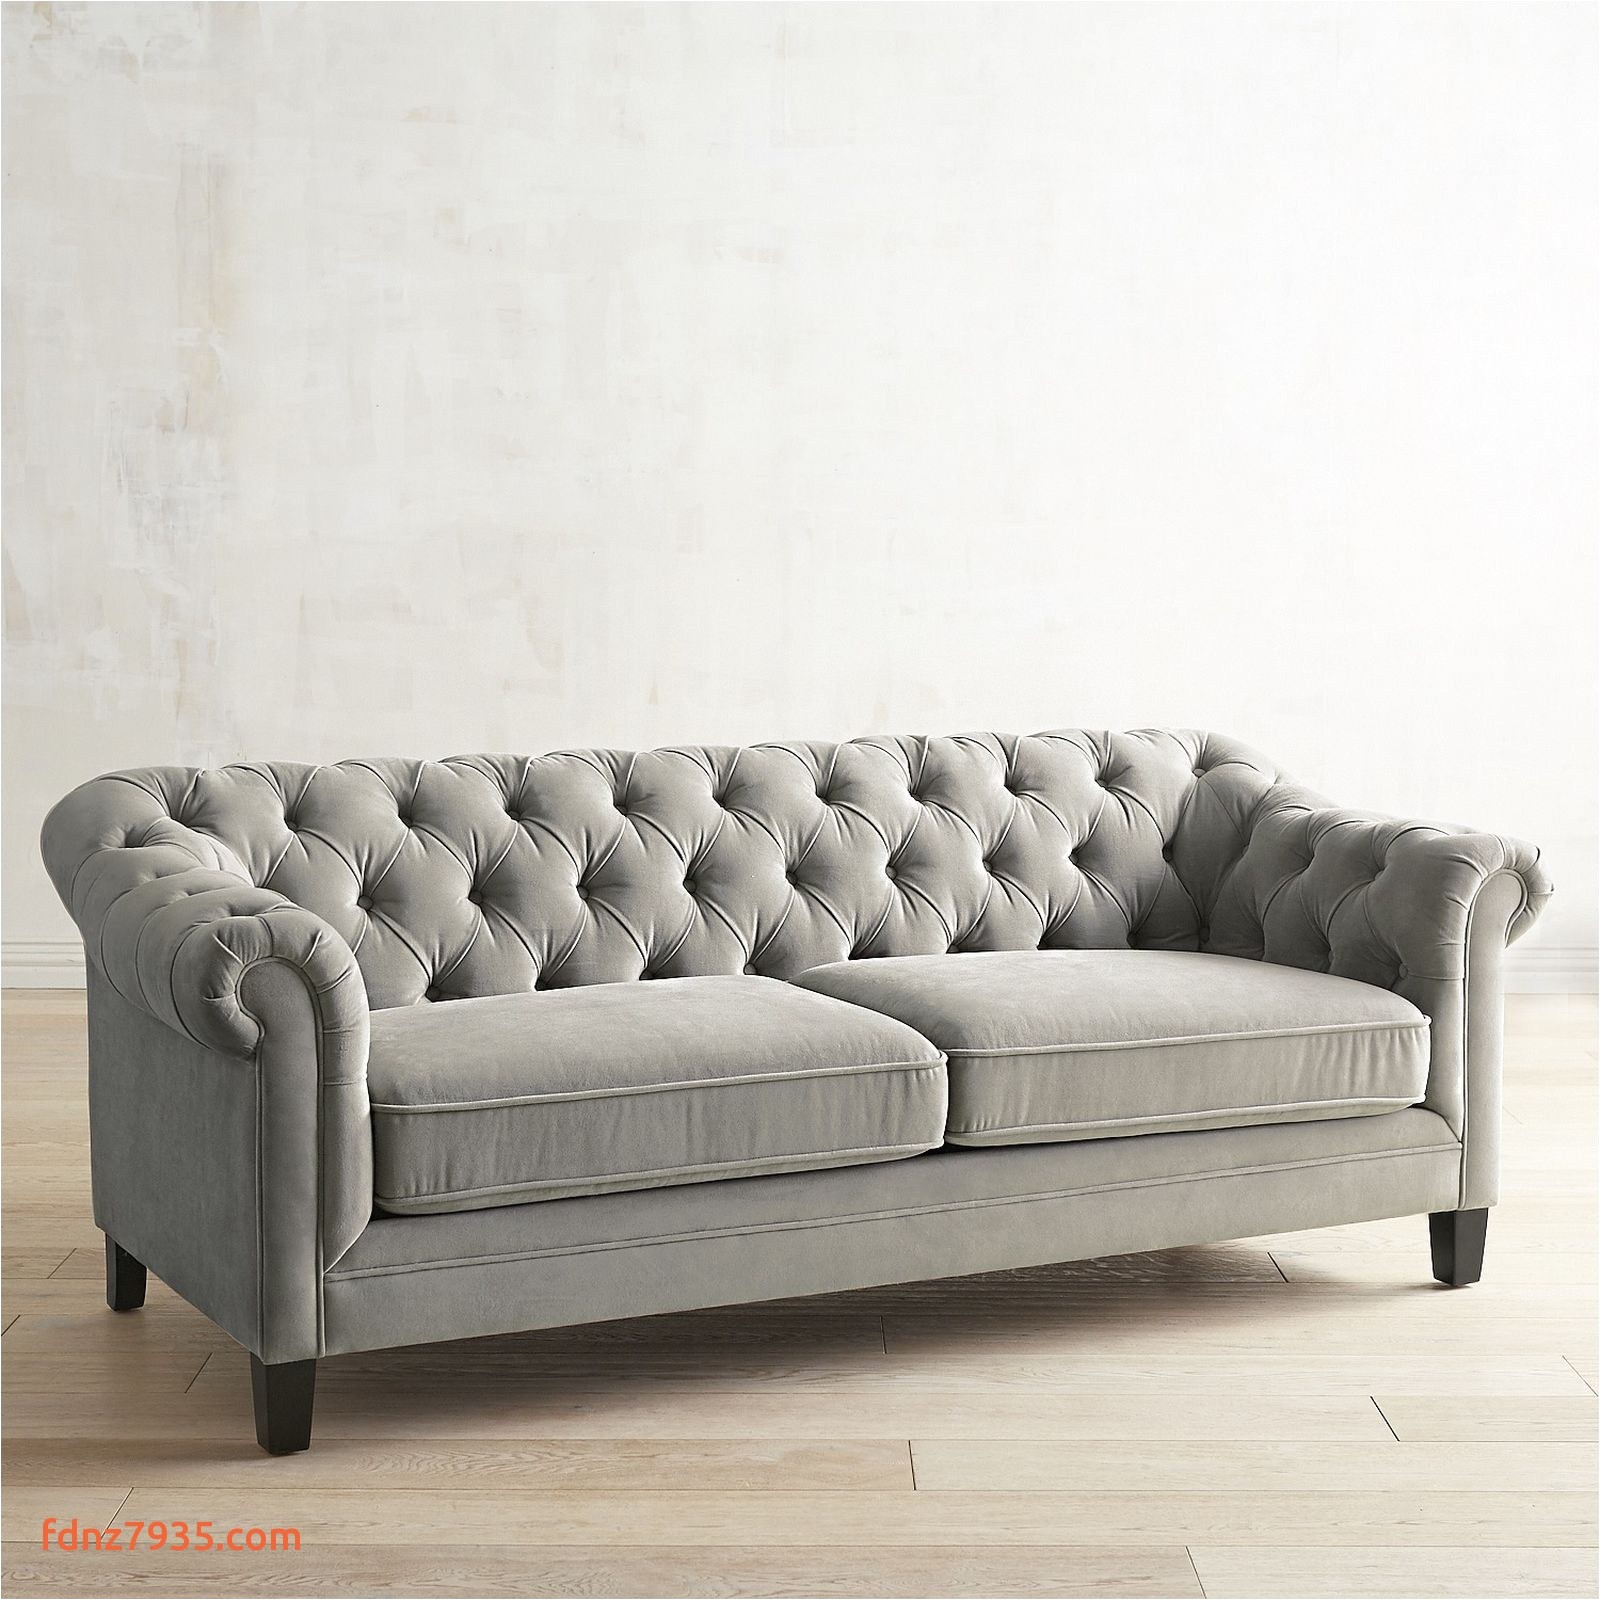 full size of sofa sofa cream tufted chloe velvet couches sofas furniture macys phenomenal